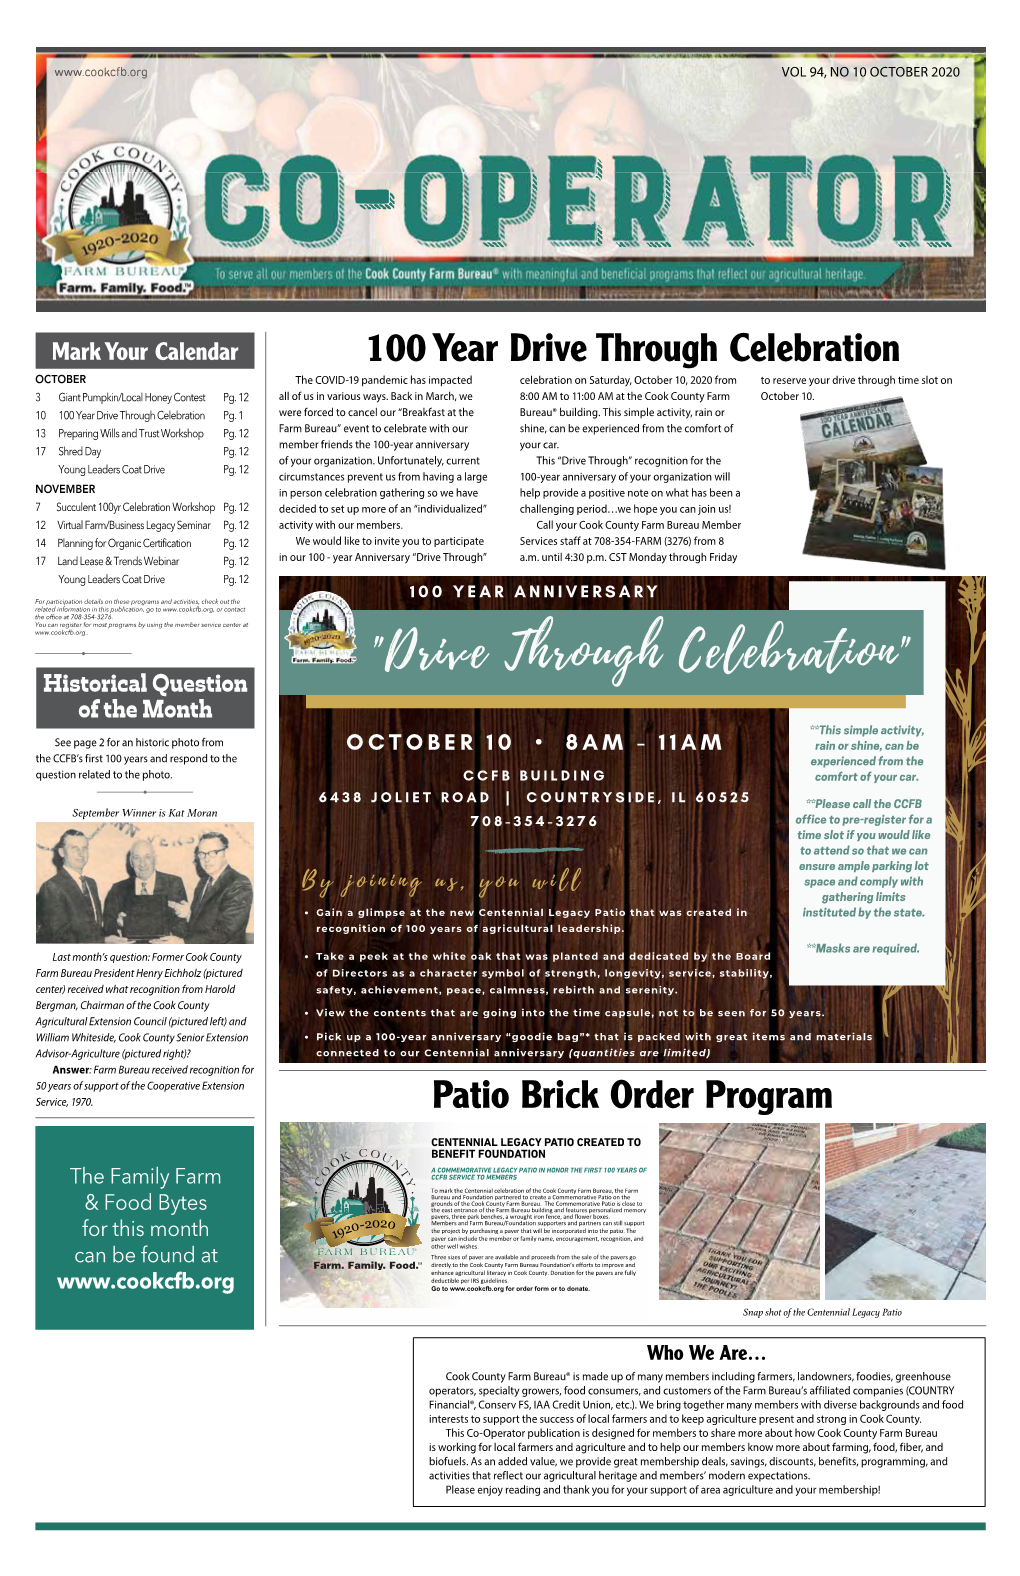 100 Year Drive Through Celebration Patio Brick Order Program